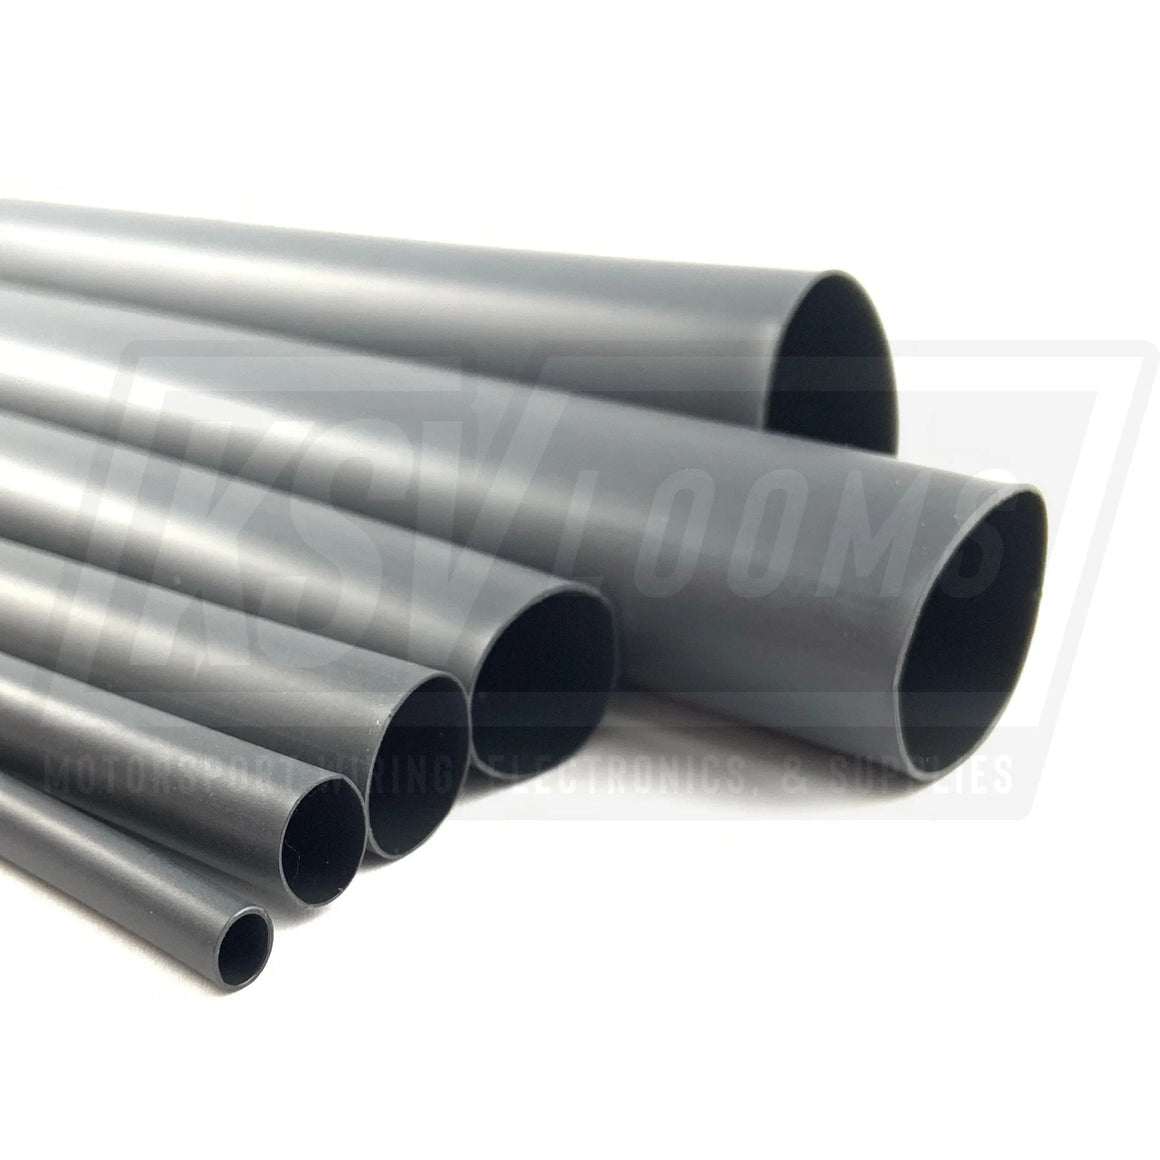 Raychem Atum Heat Shrink Adhesive Lined Tubing (1’ Length) 1’